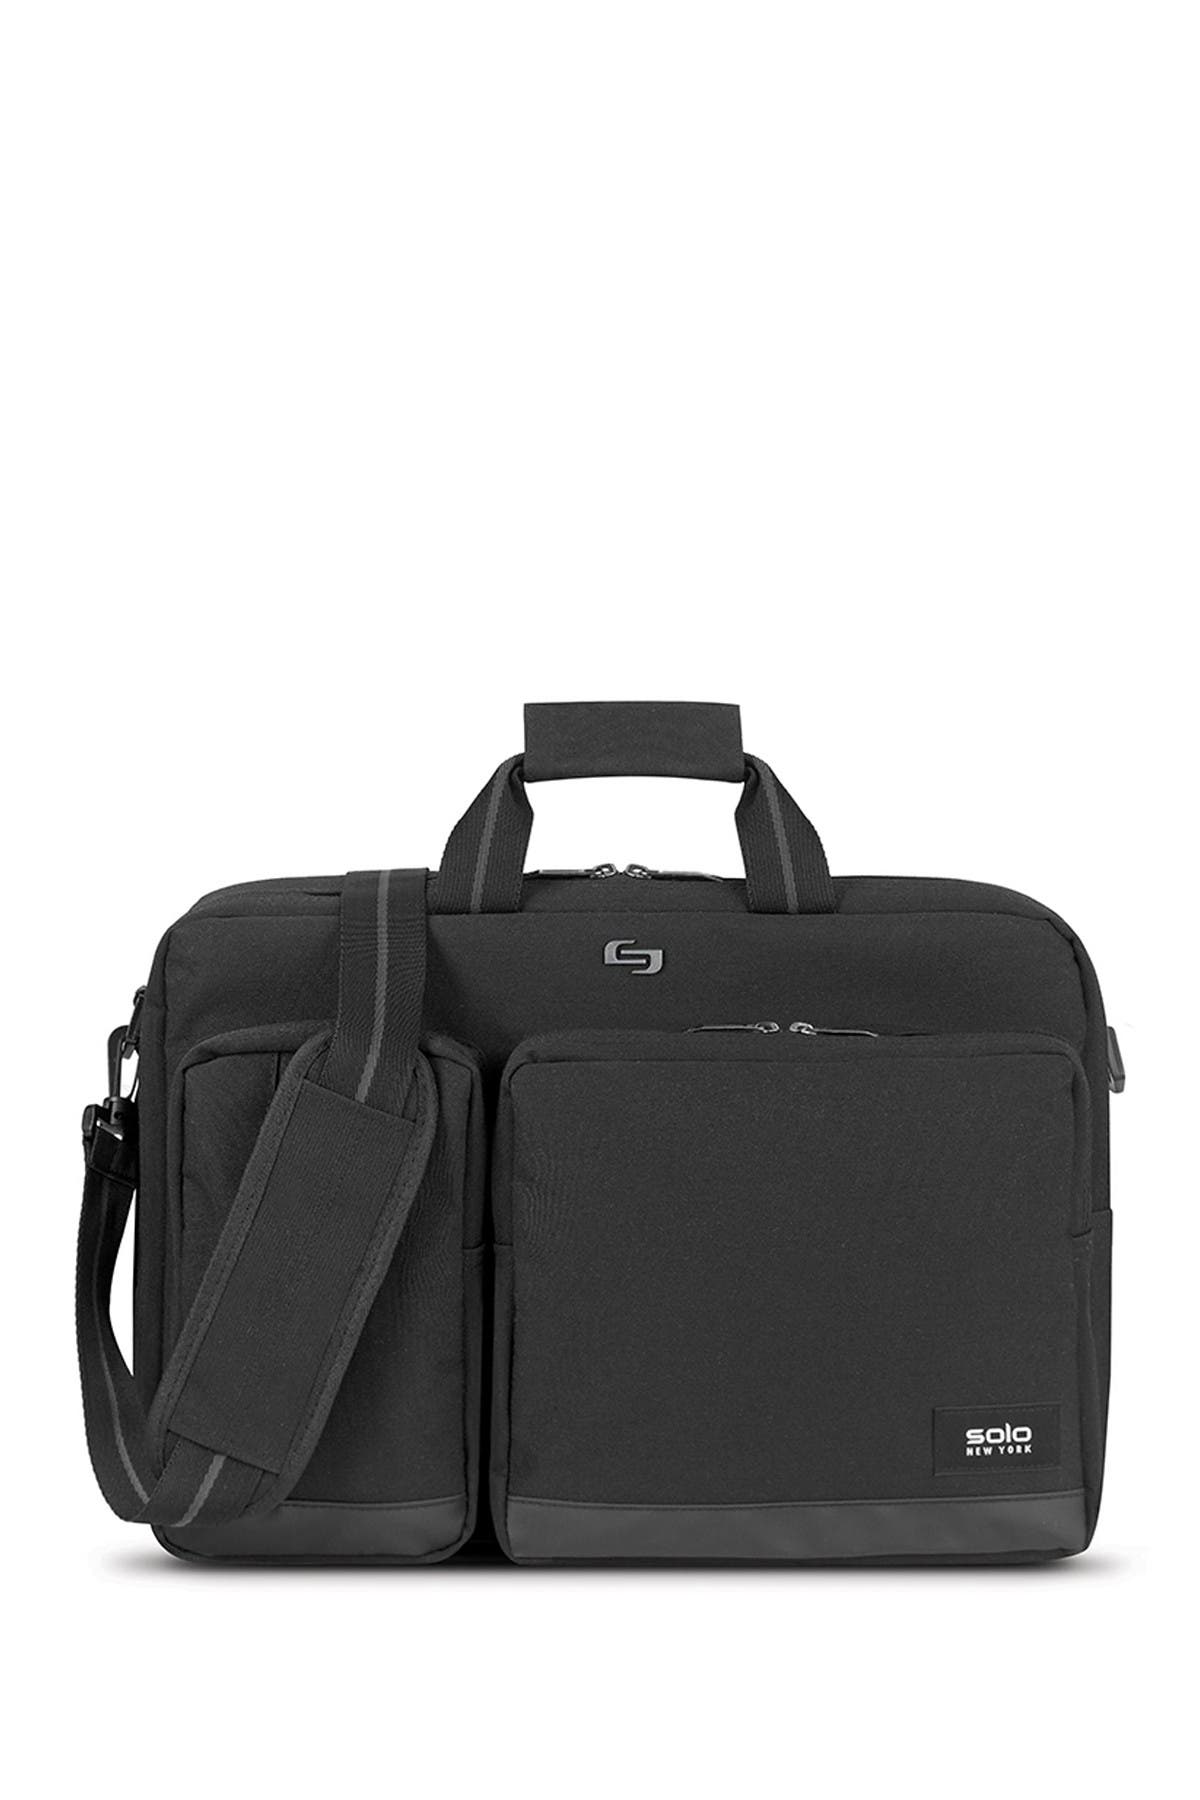 Solo New York Duane Hybrid Briefcase & Backpack In Black | ModeSens